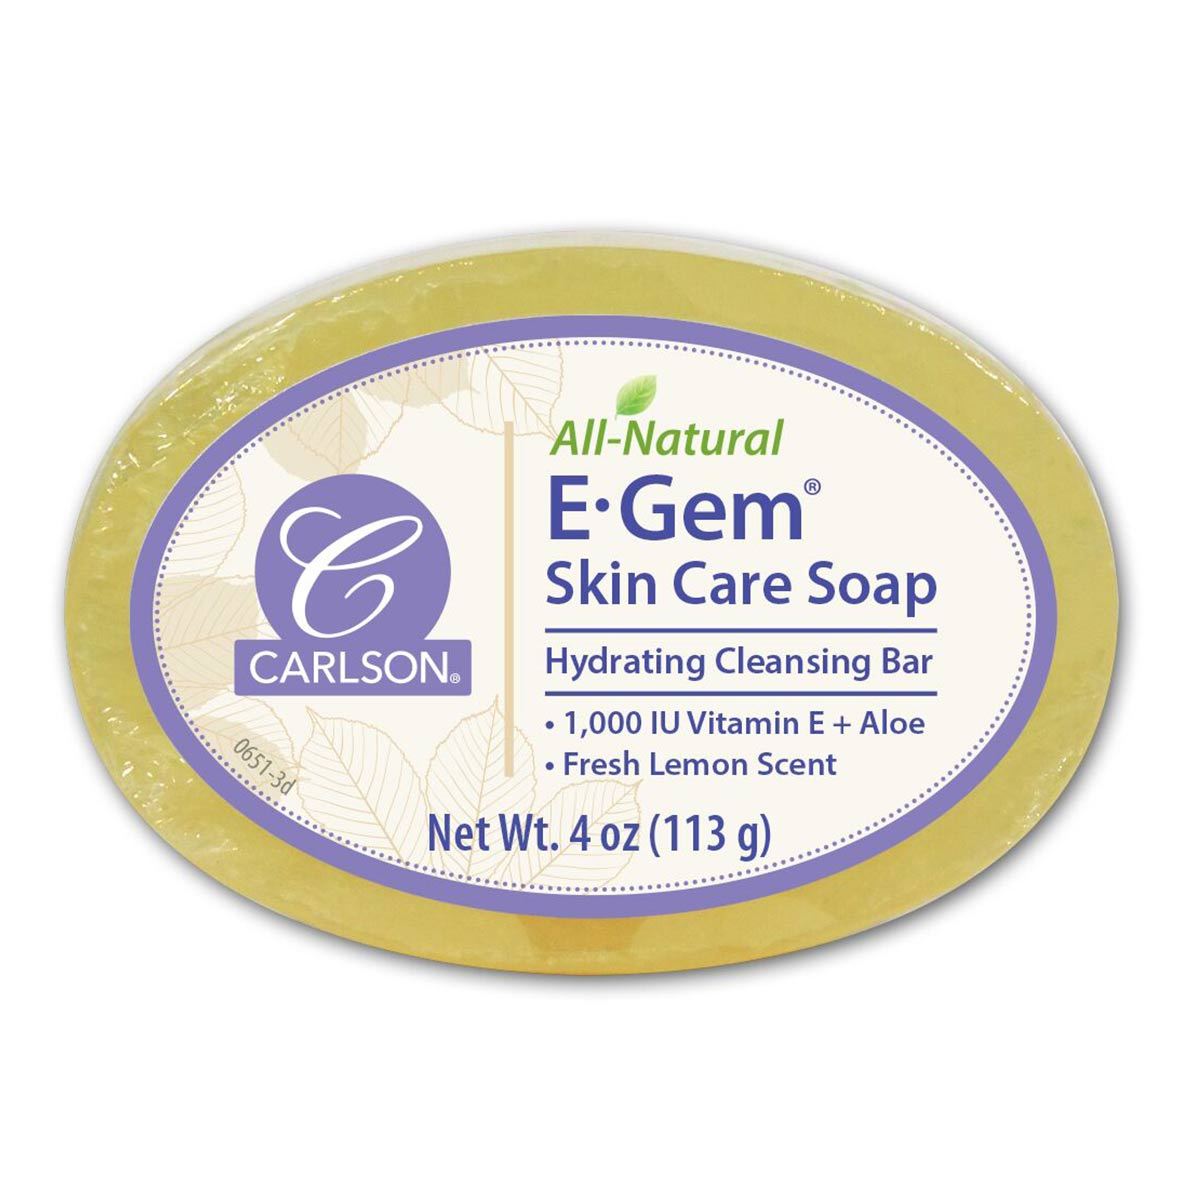 Primary image of E Gem Skin Care Soap